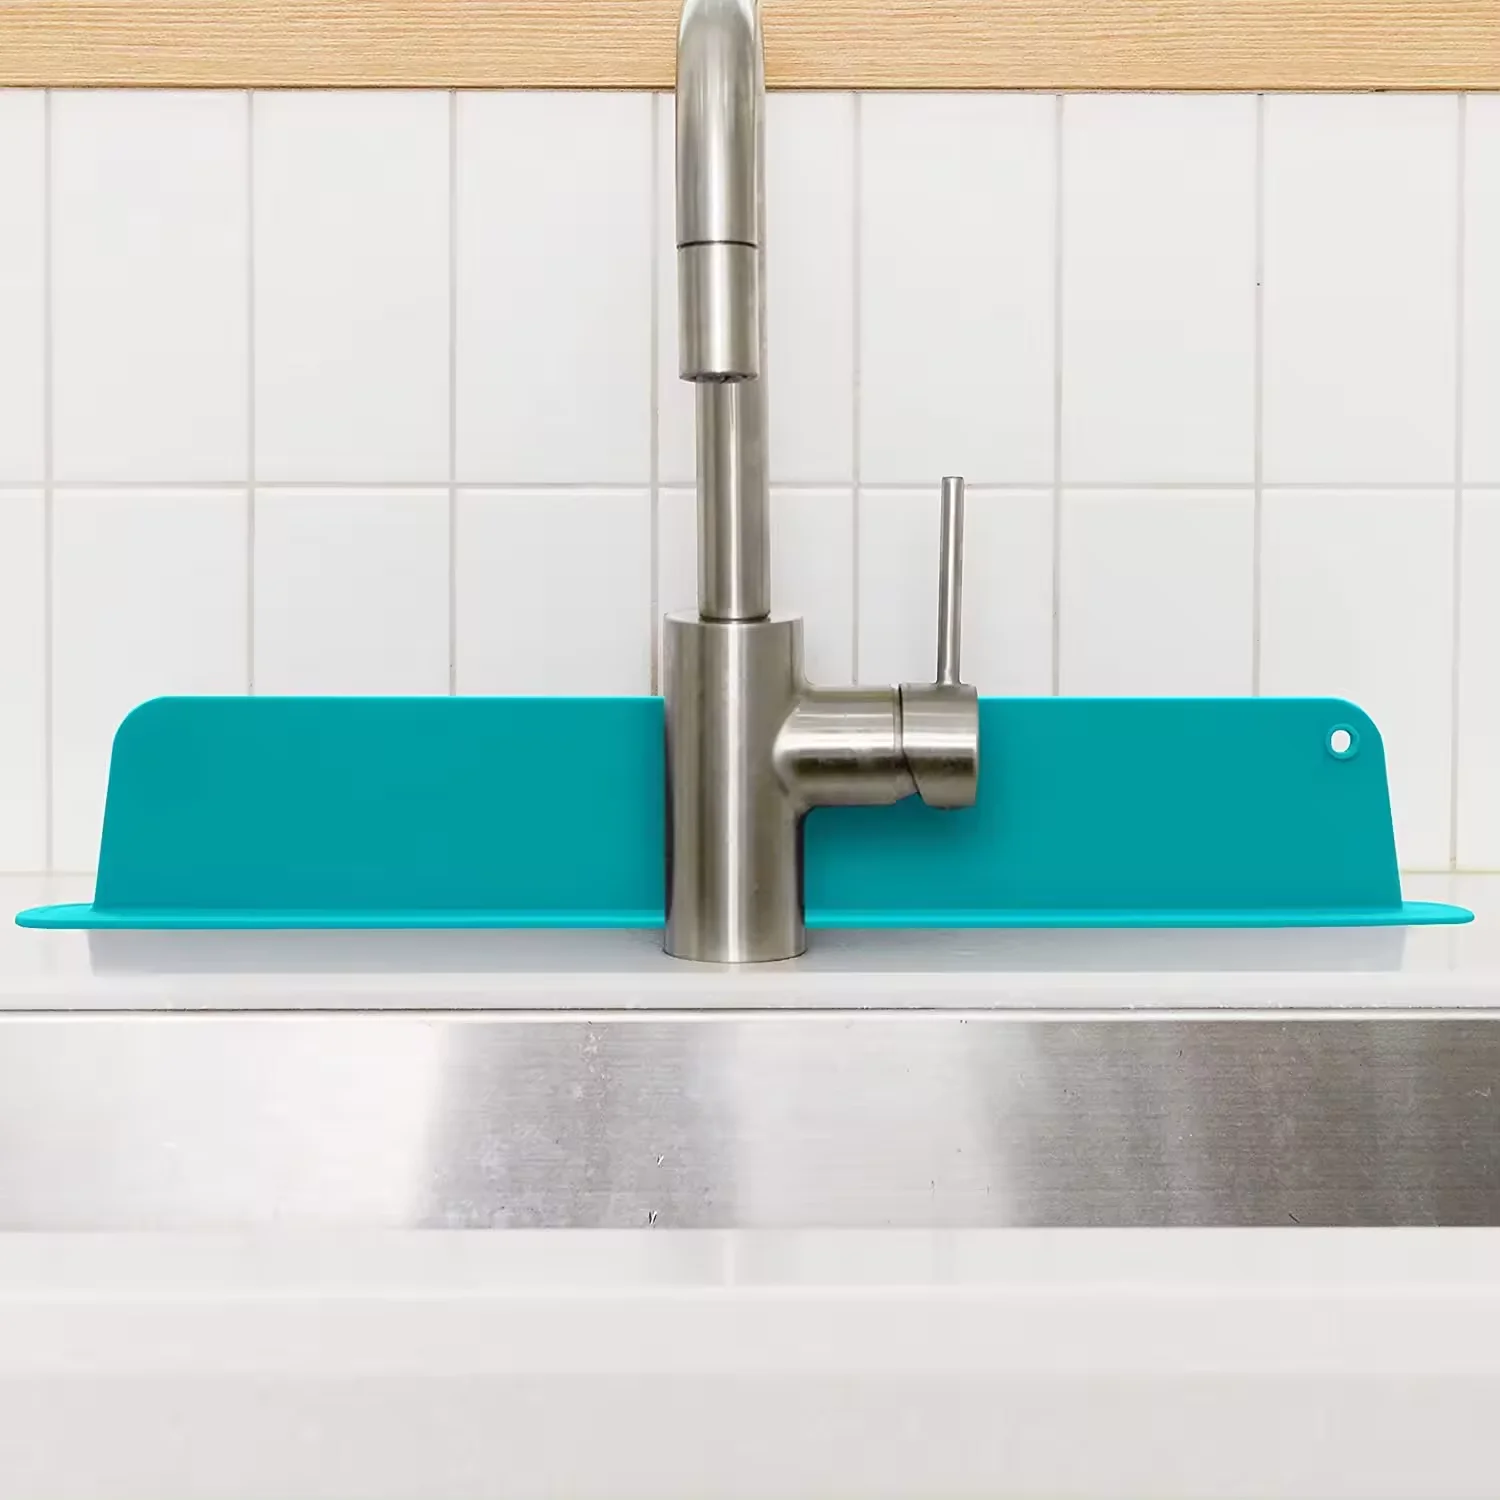 Silicone Countertop Sink Splash Guard Kitchen Tools Kitchen Tools  For Kitchen Sink Machine Washable